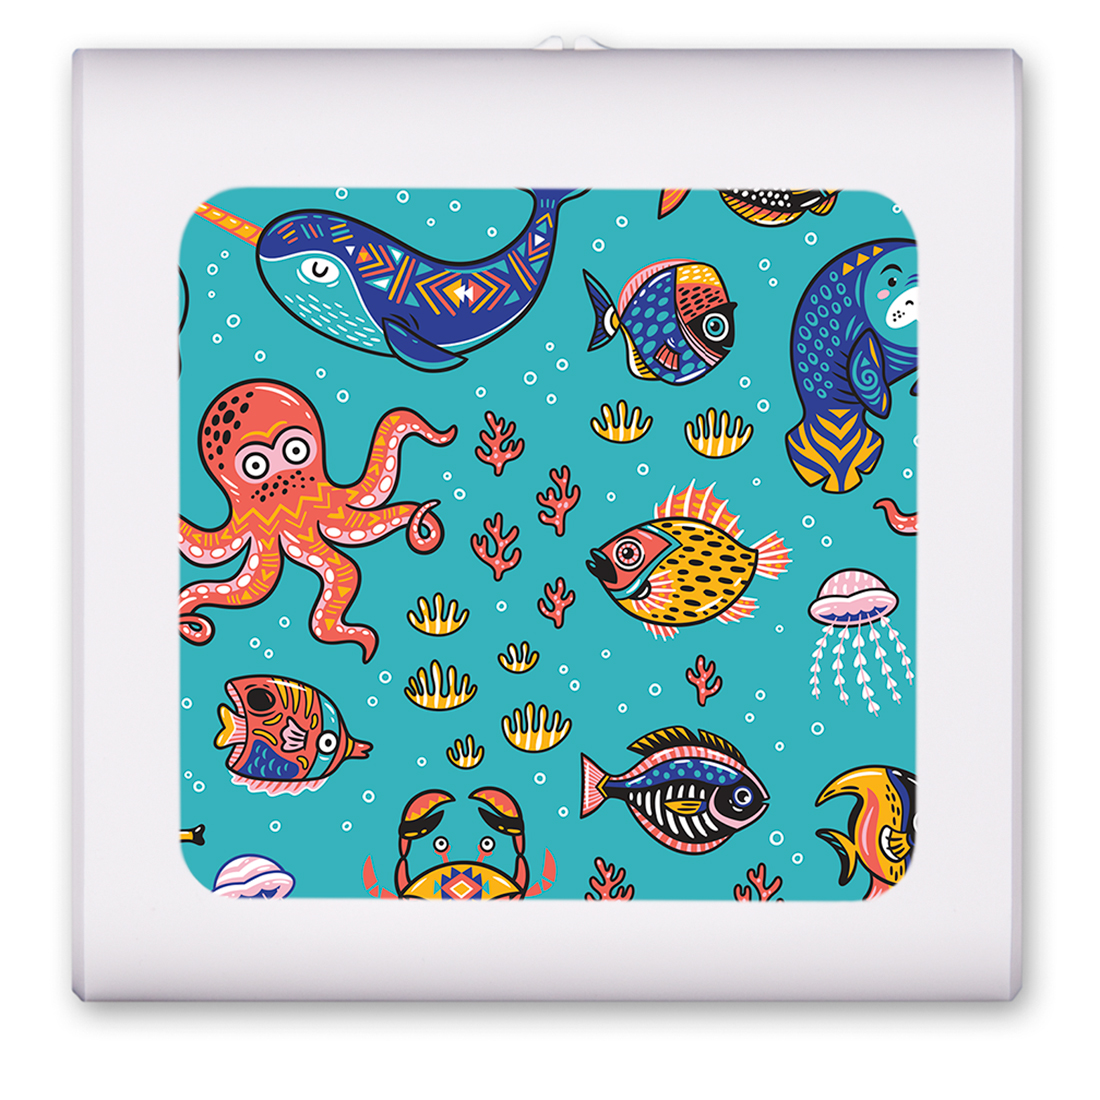 Whimsical Sea Creatures - #2736